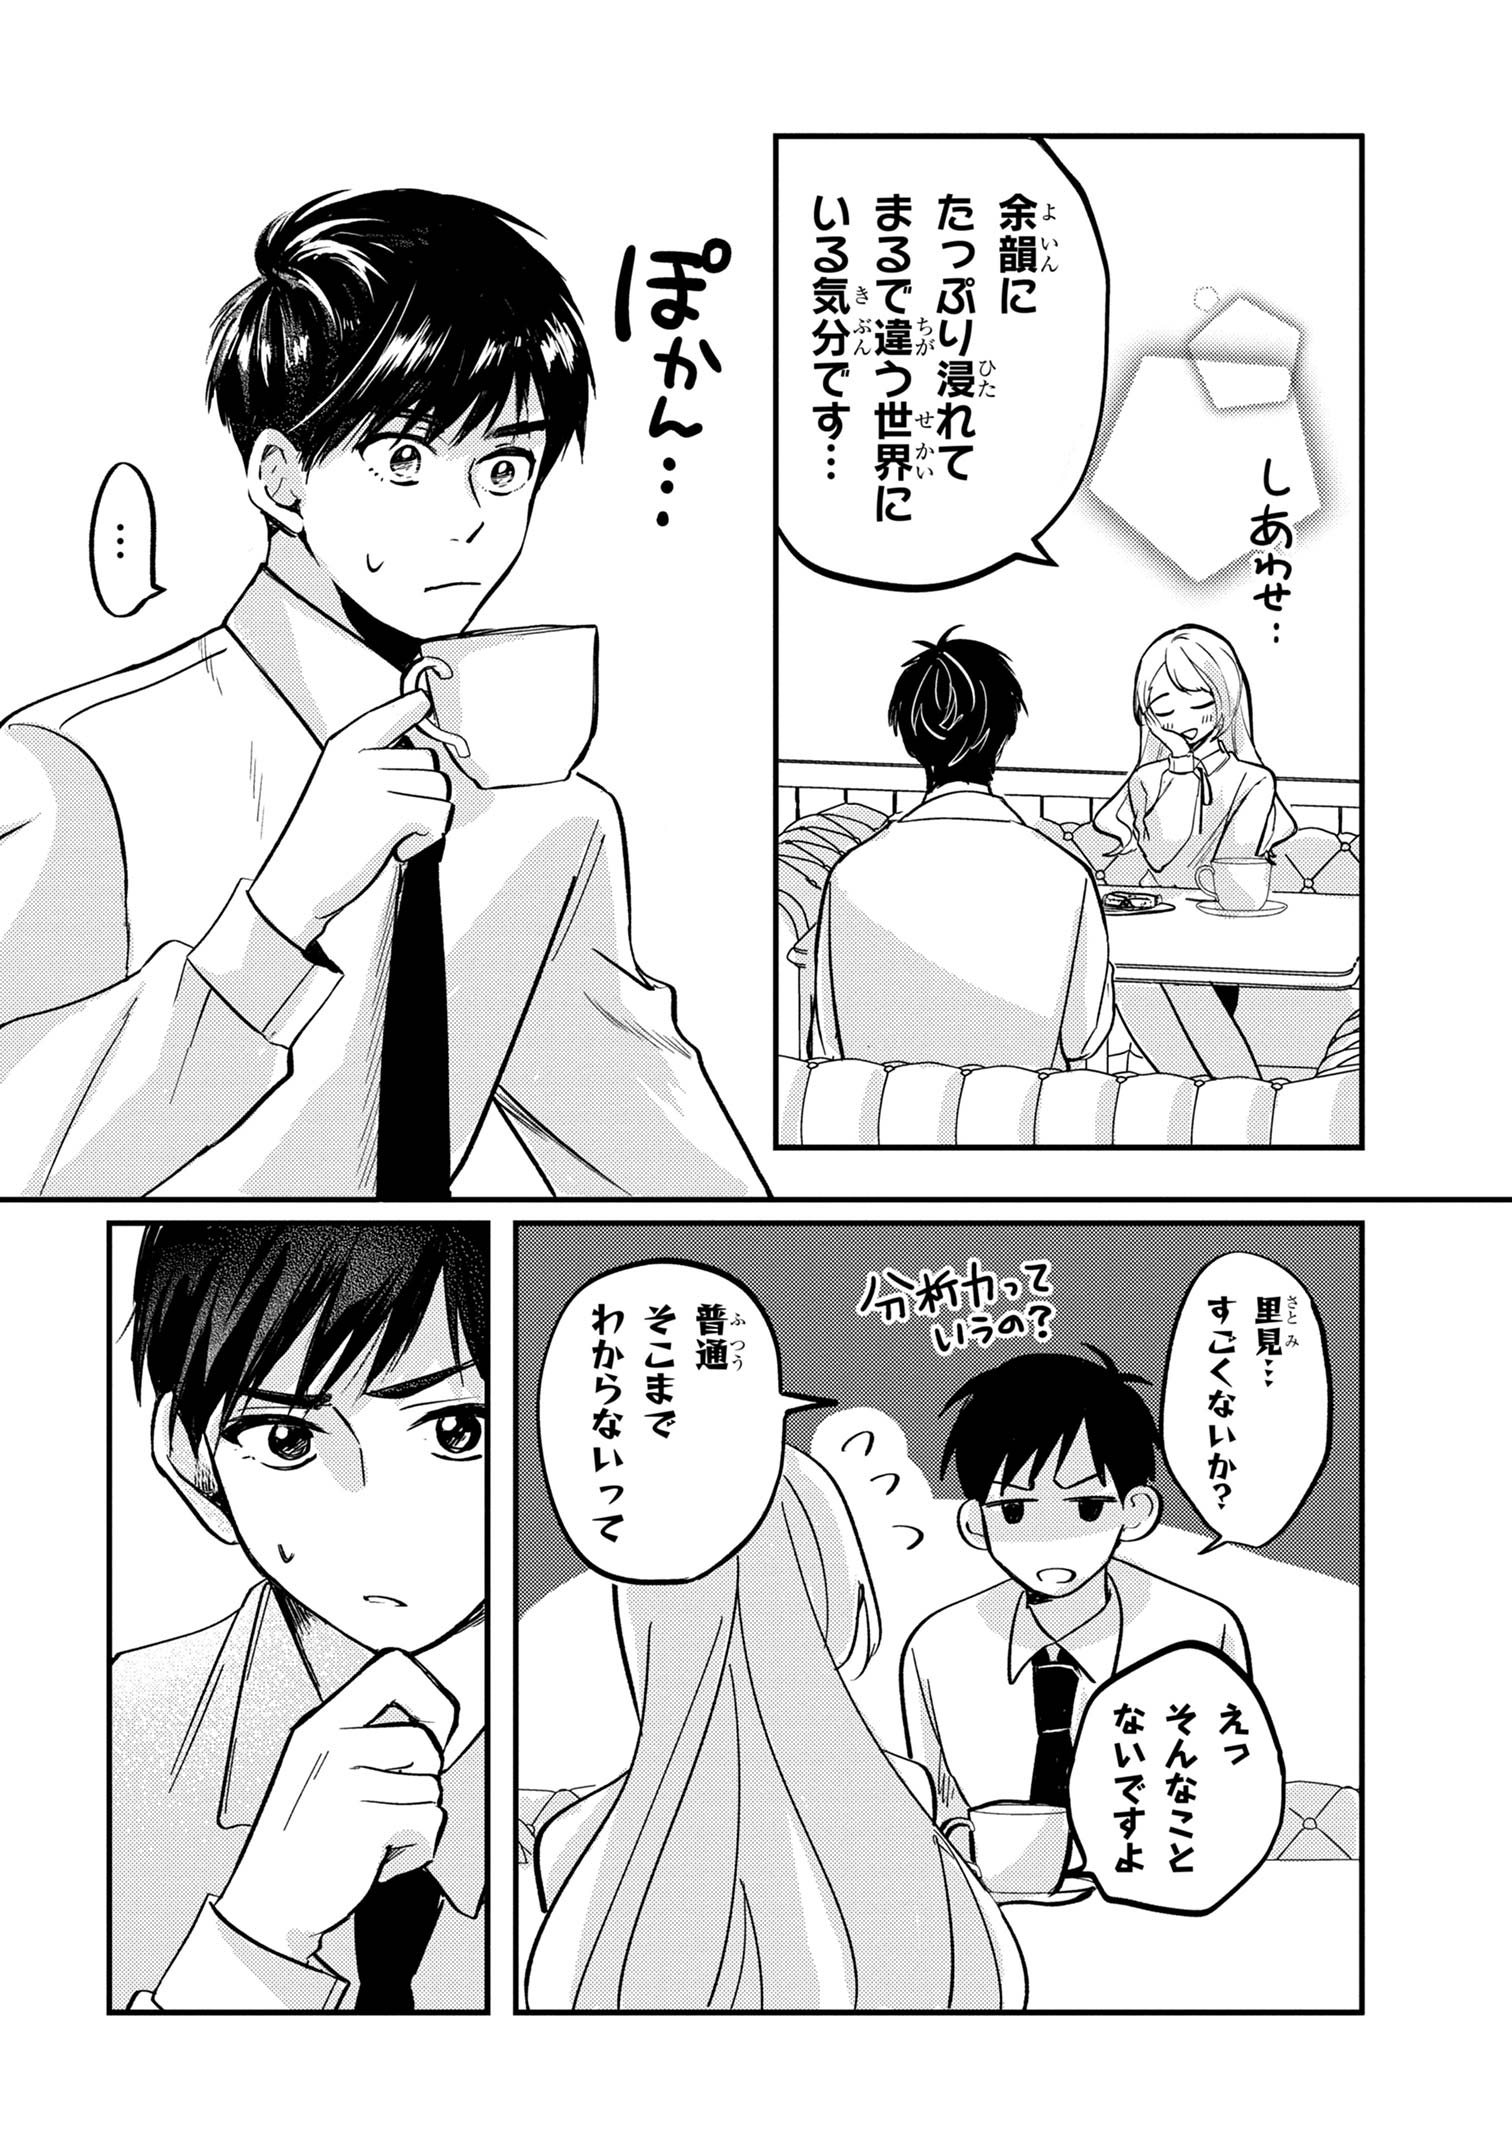 Aisare Tenshi na Classmate ga, Ore ni Dake Itazura ni Hohoemu - Chapter 1 - Page 25